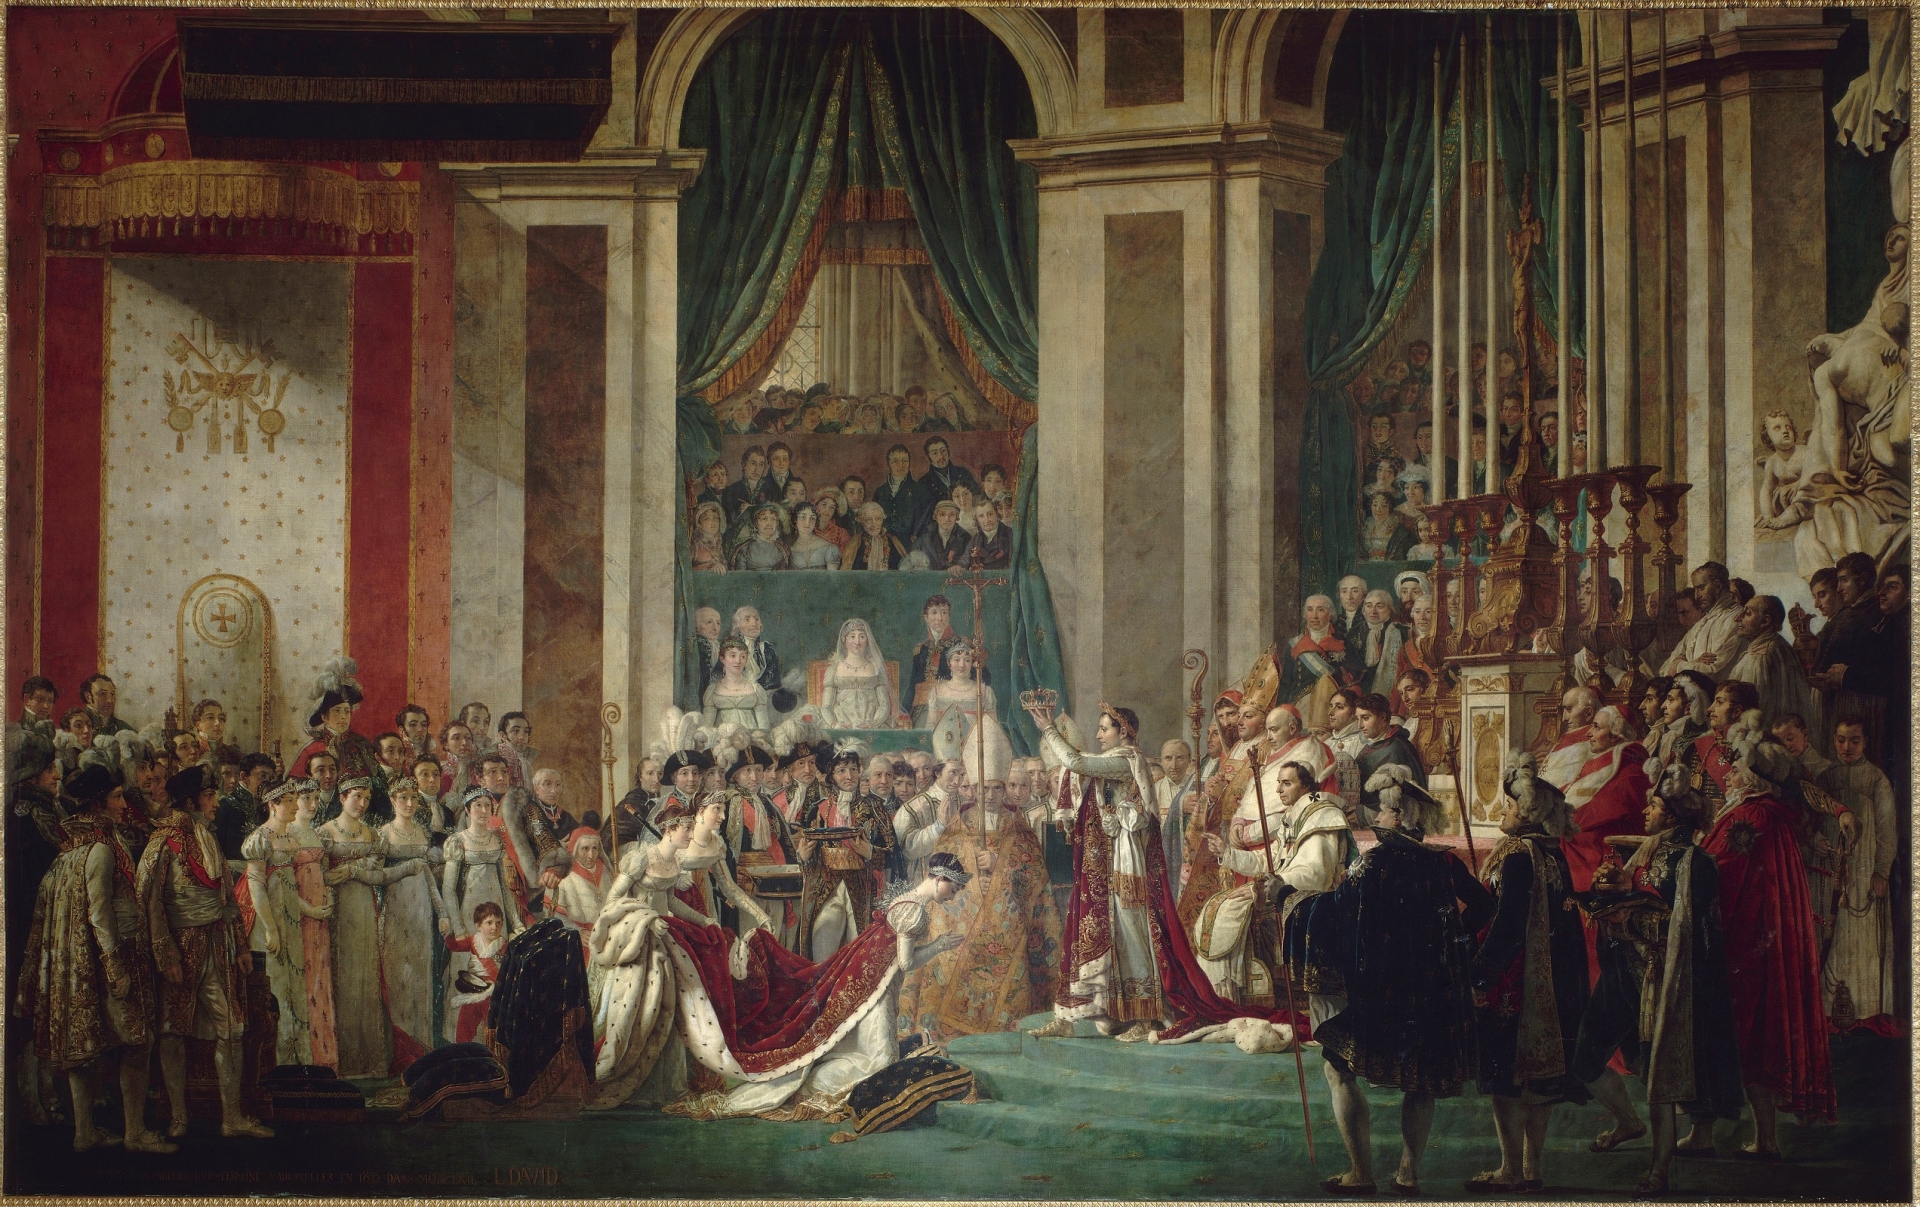 Chateau de Versailles, Sex, Lies and the Guillotine